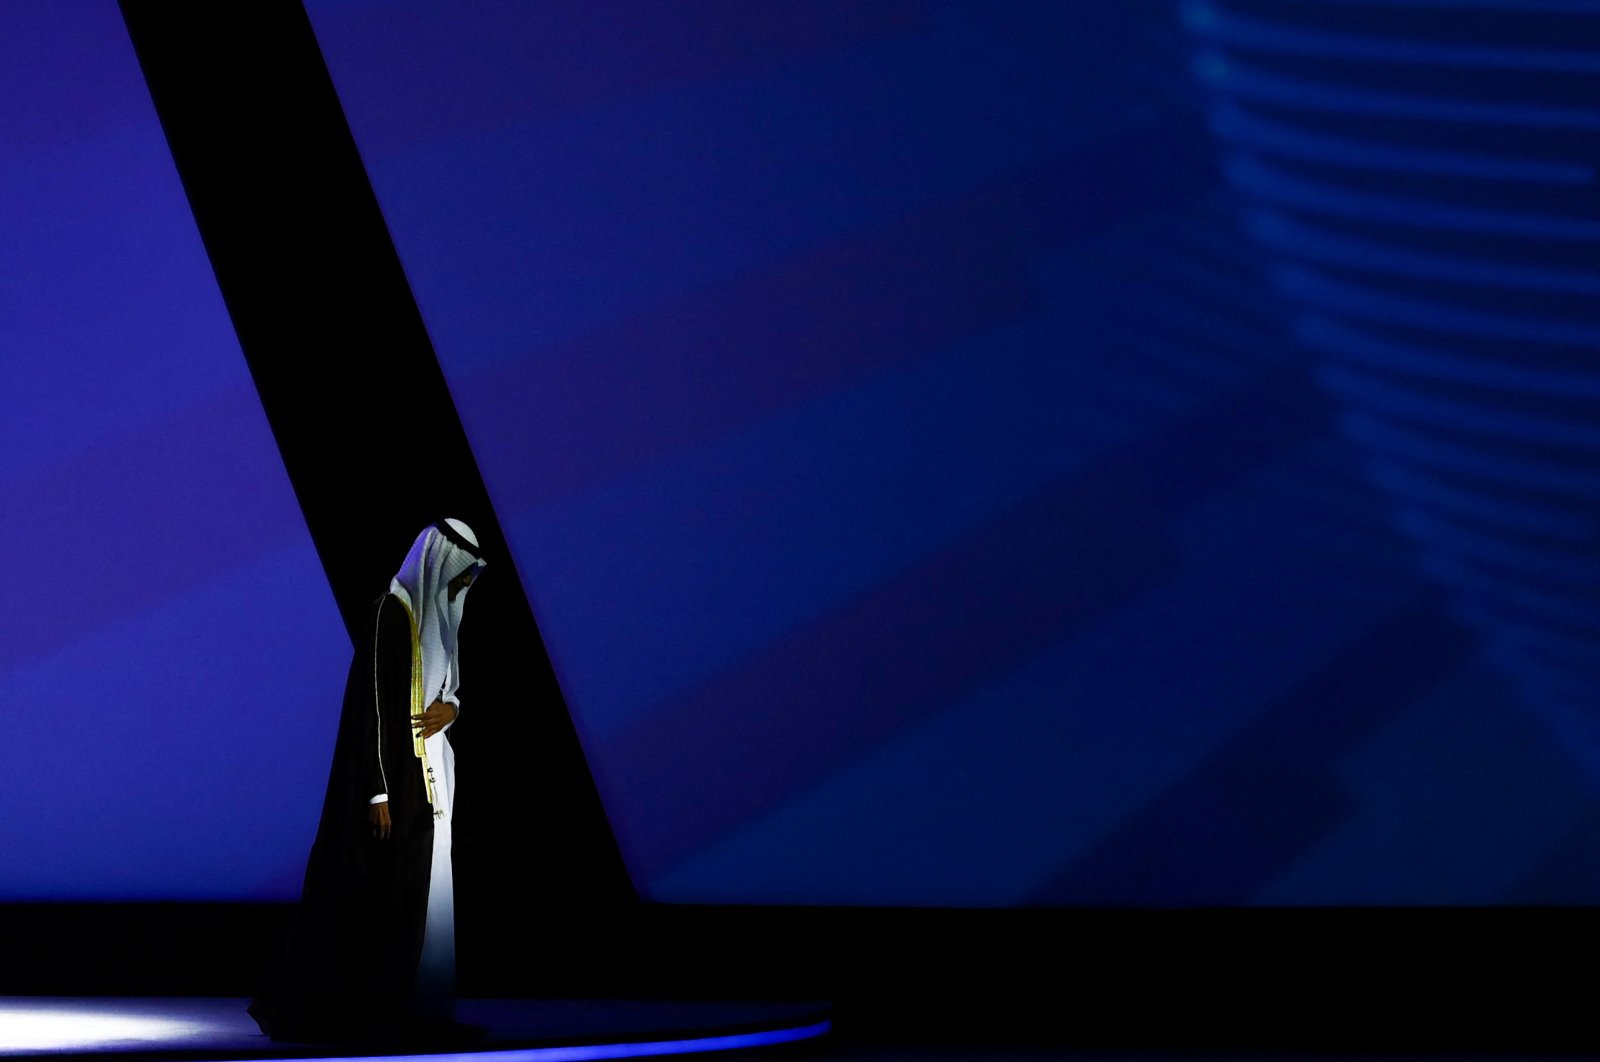 Saudi Arabia&#039;s Energy Minister Prince Abdulaziz bin Salman leaves the stage after speaking at the Abu Dhabi International Petroleum Exhibition &amp; Conference (ADIPEC) in Abu Dhabi, United Arab Emirates, Oct. 31, 2022. (Reuters Photo)